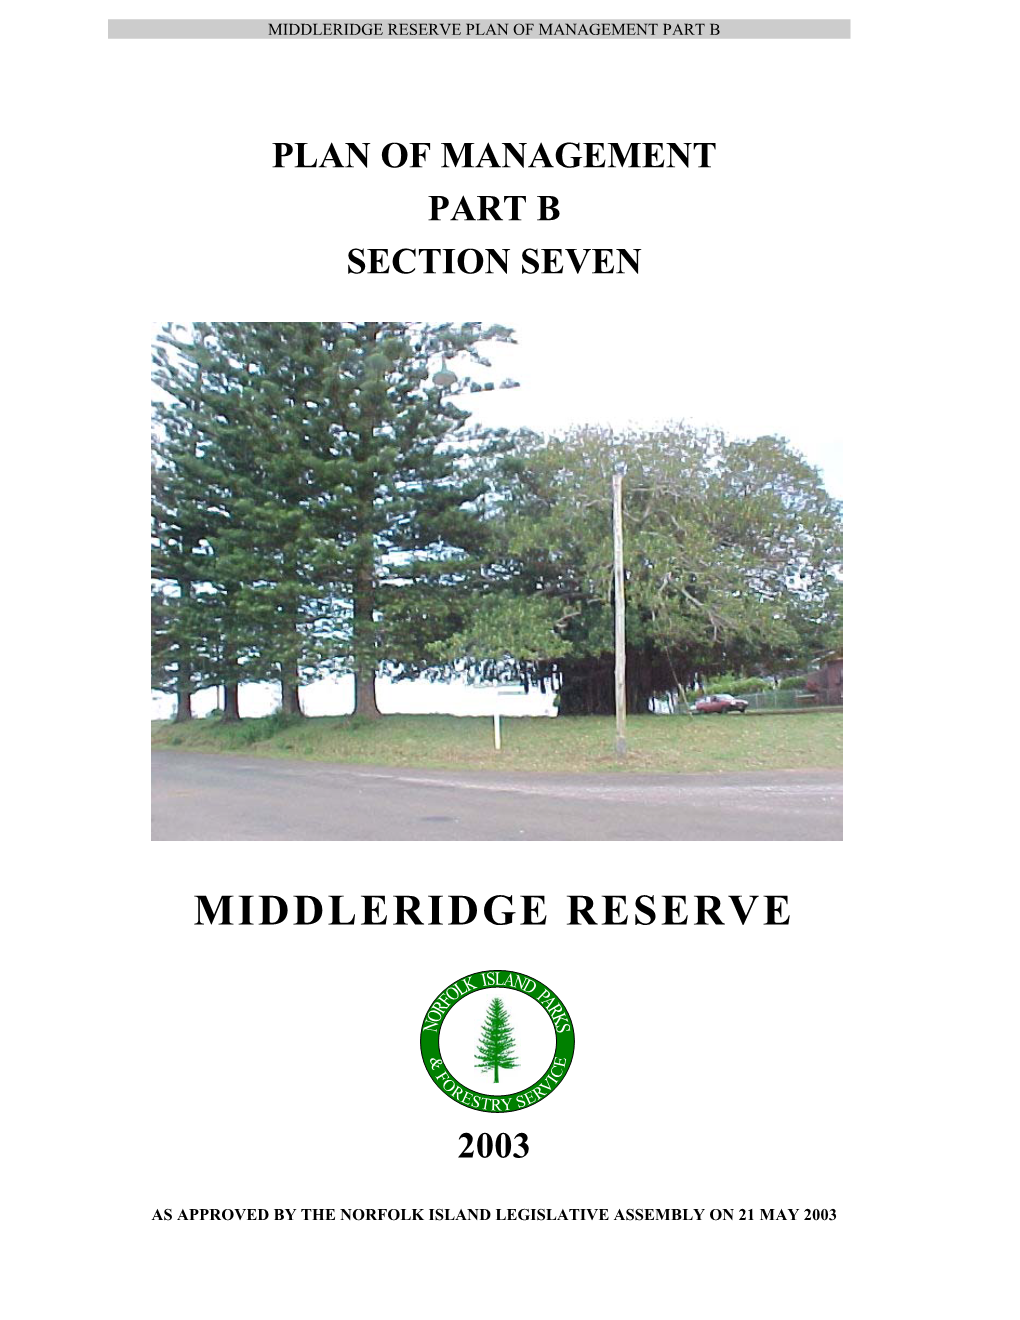 Middleridge Reserve Plan of Management Part B